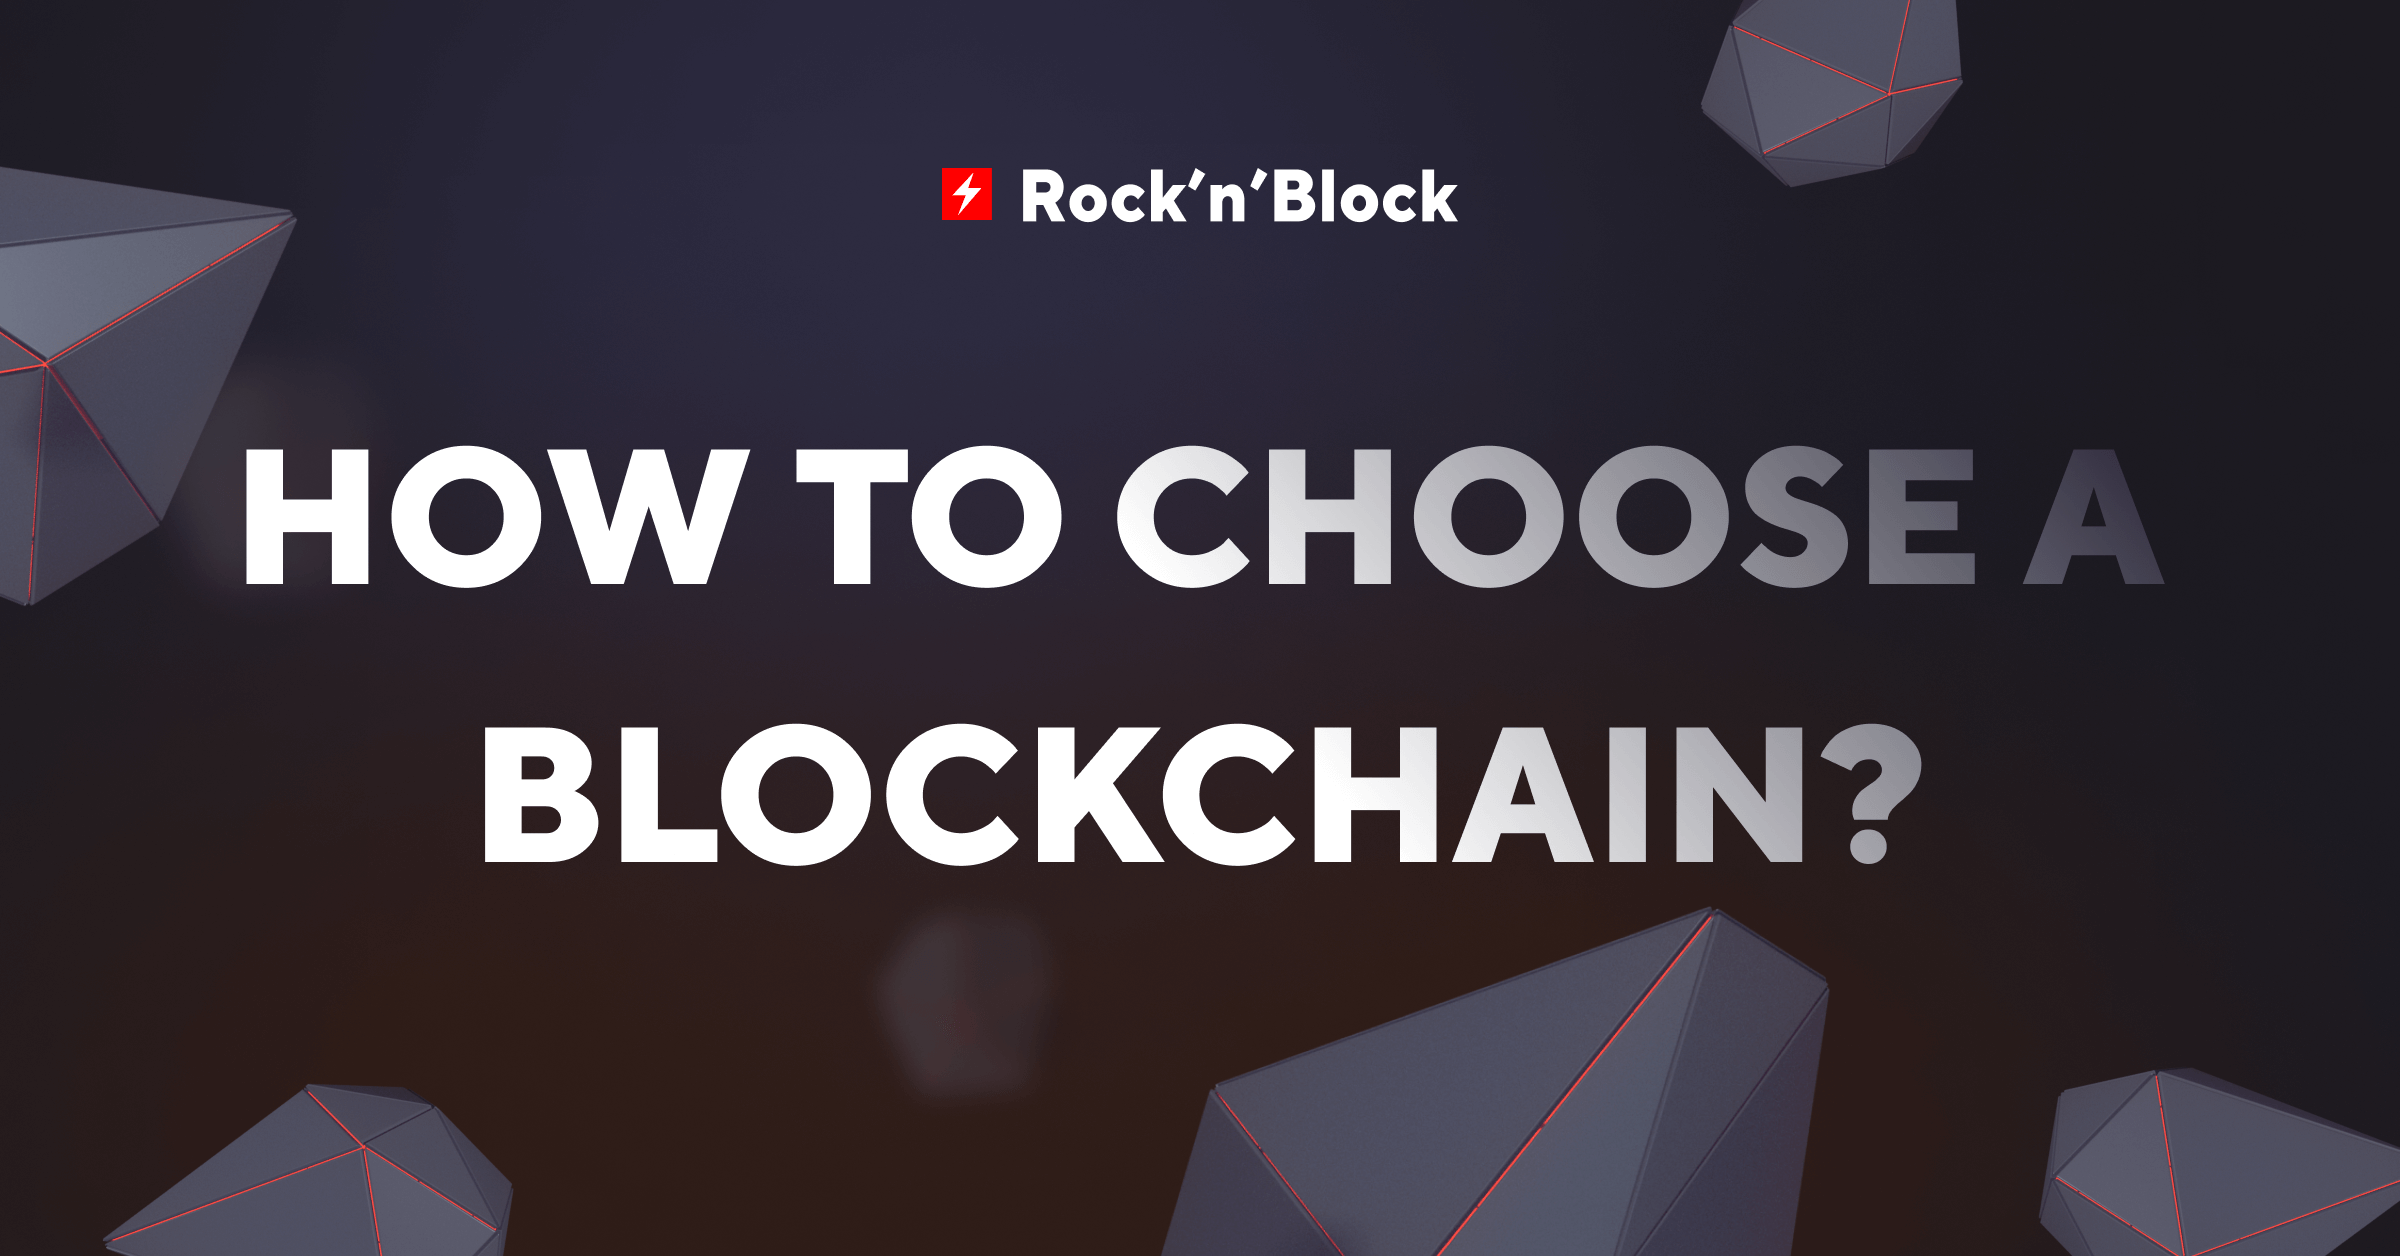 Rock'n'Block blockchain developer is explaining how to choose a blockchain